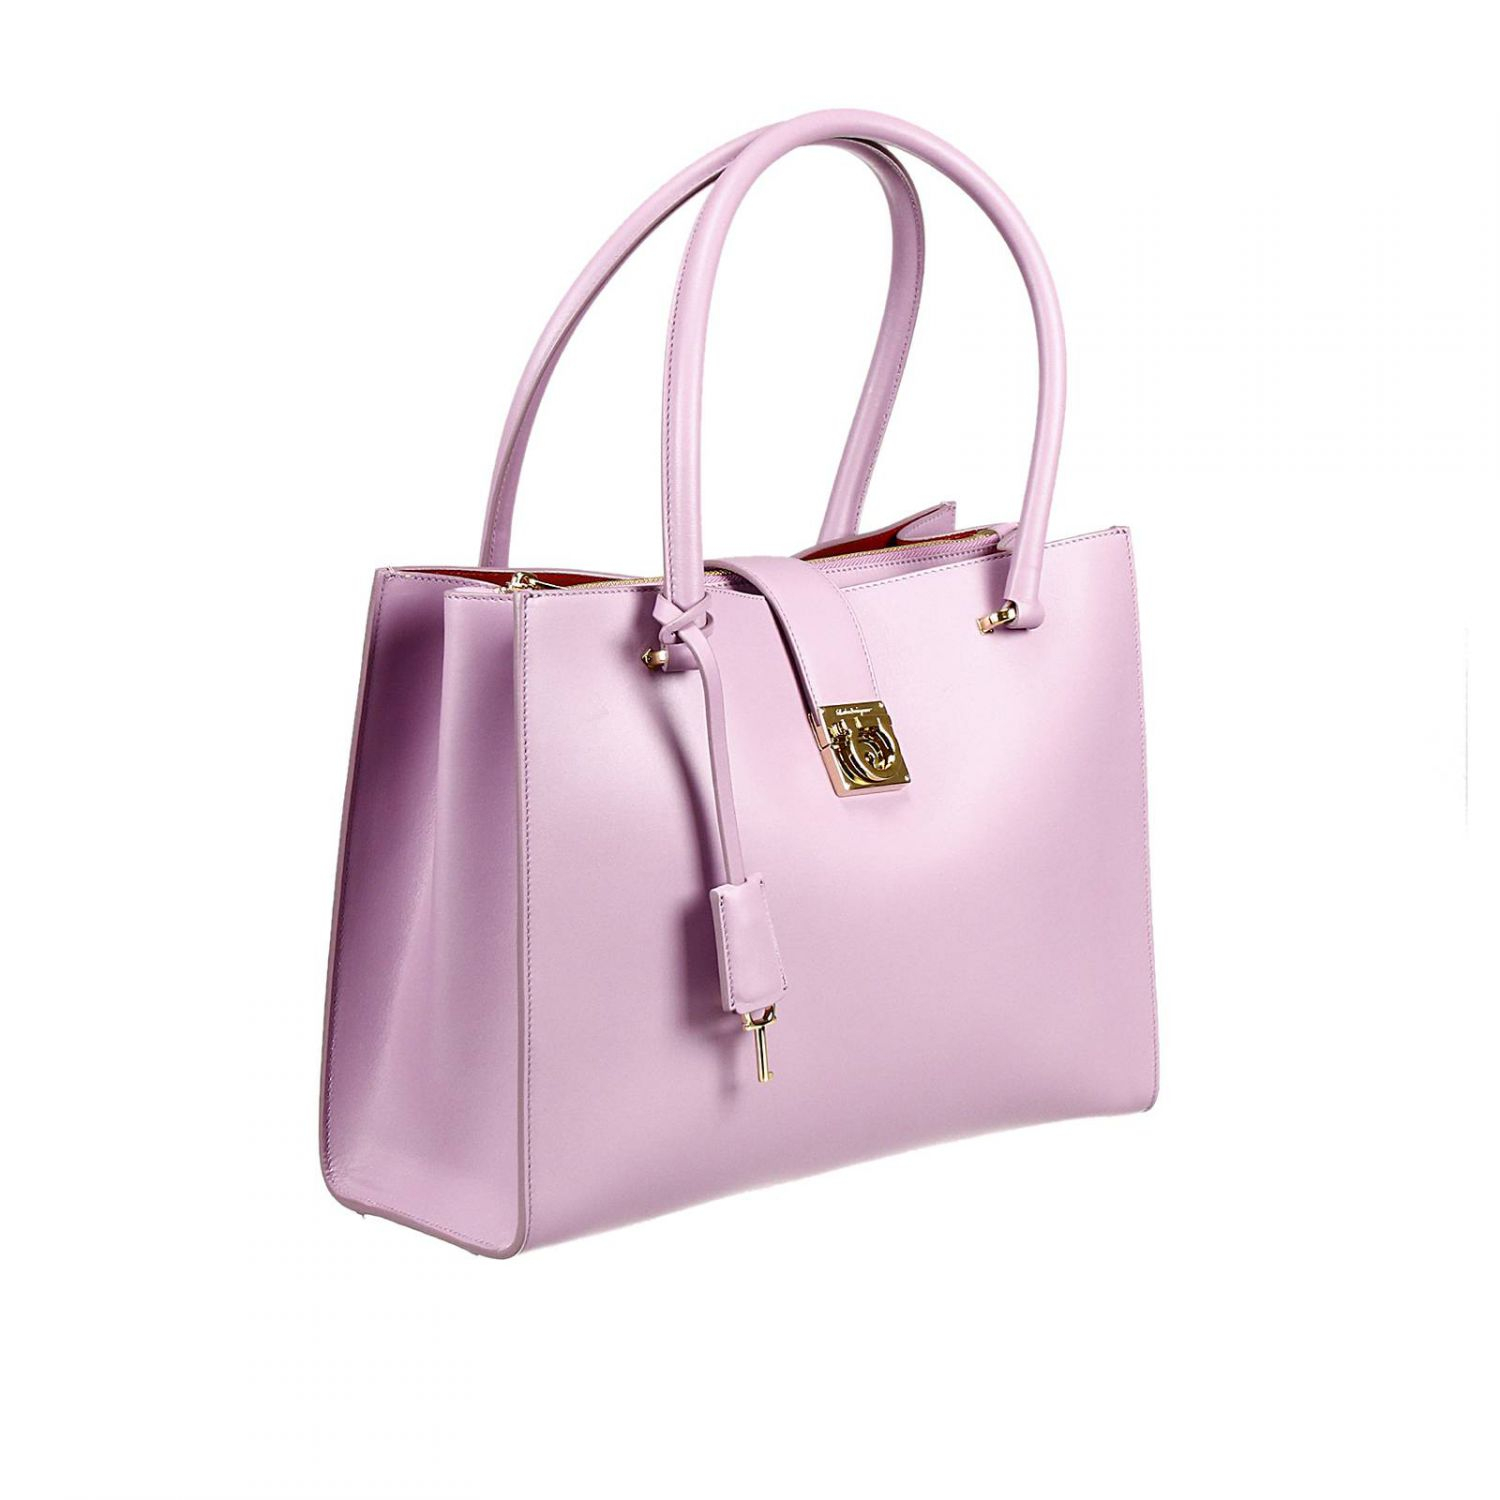 Lyst - Ferragamo Handbag Bag Marlene 2 Handles Medium Zip in Purple